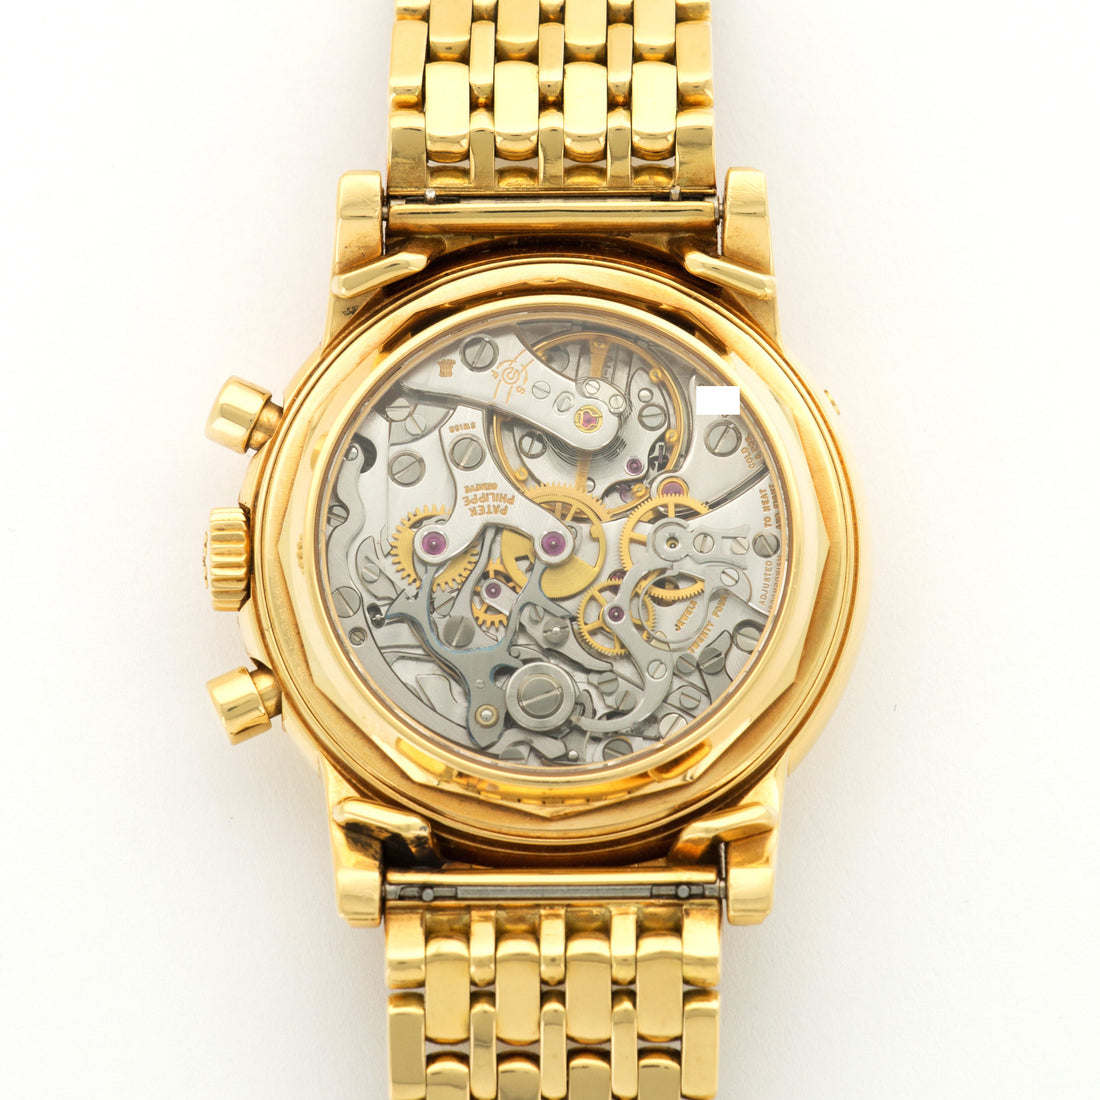 Patek Philippe Yellow Gold 2nd Series Perpetual Calendar Chrono Watch Ref. 3970